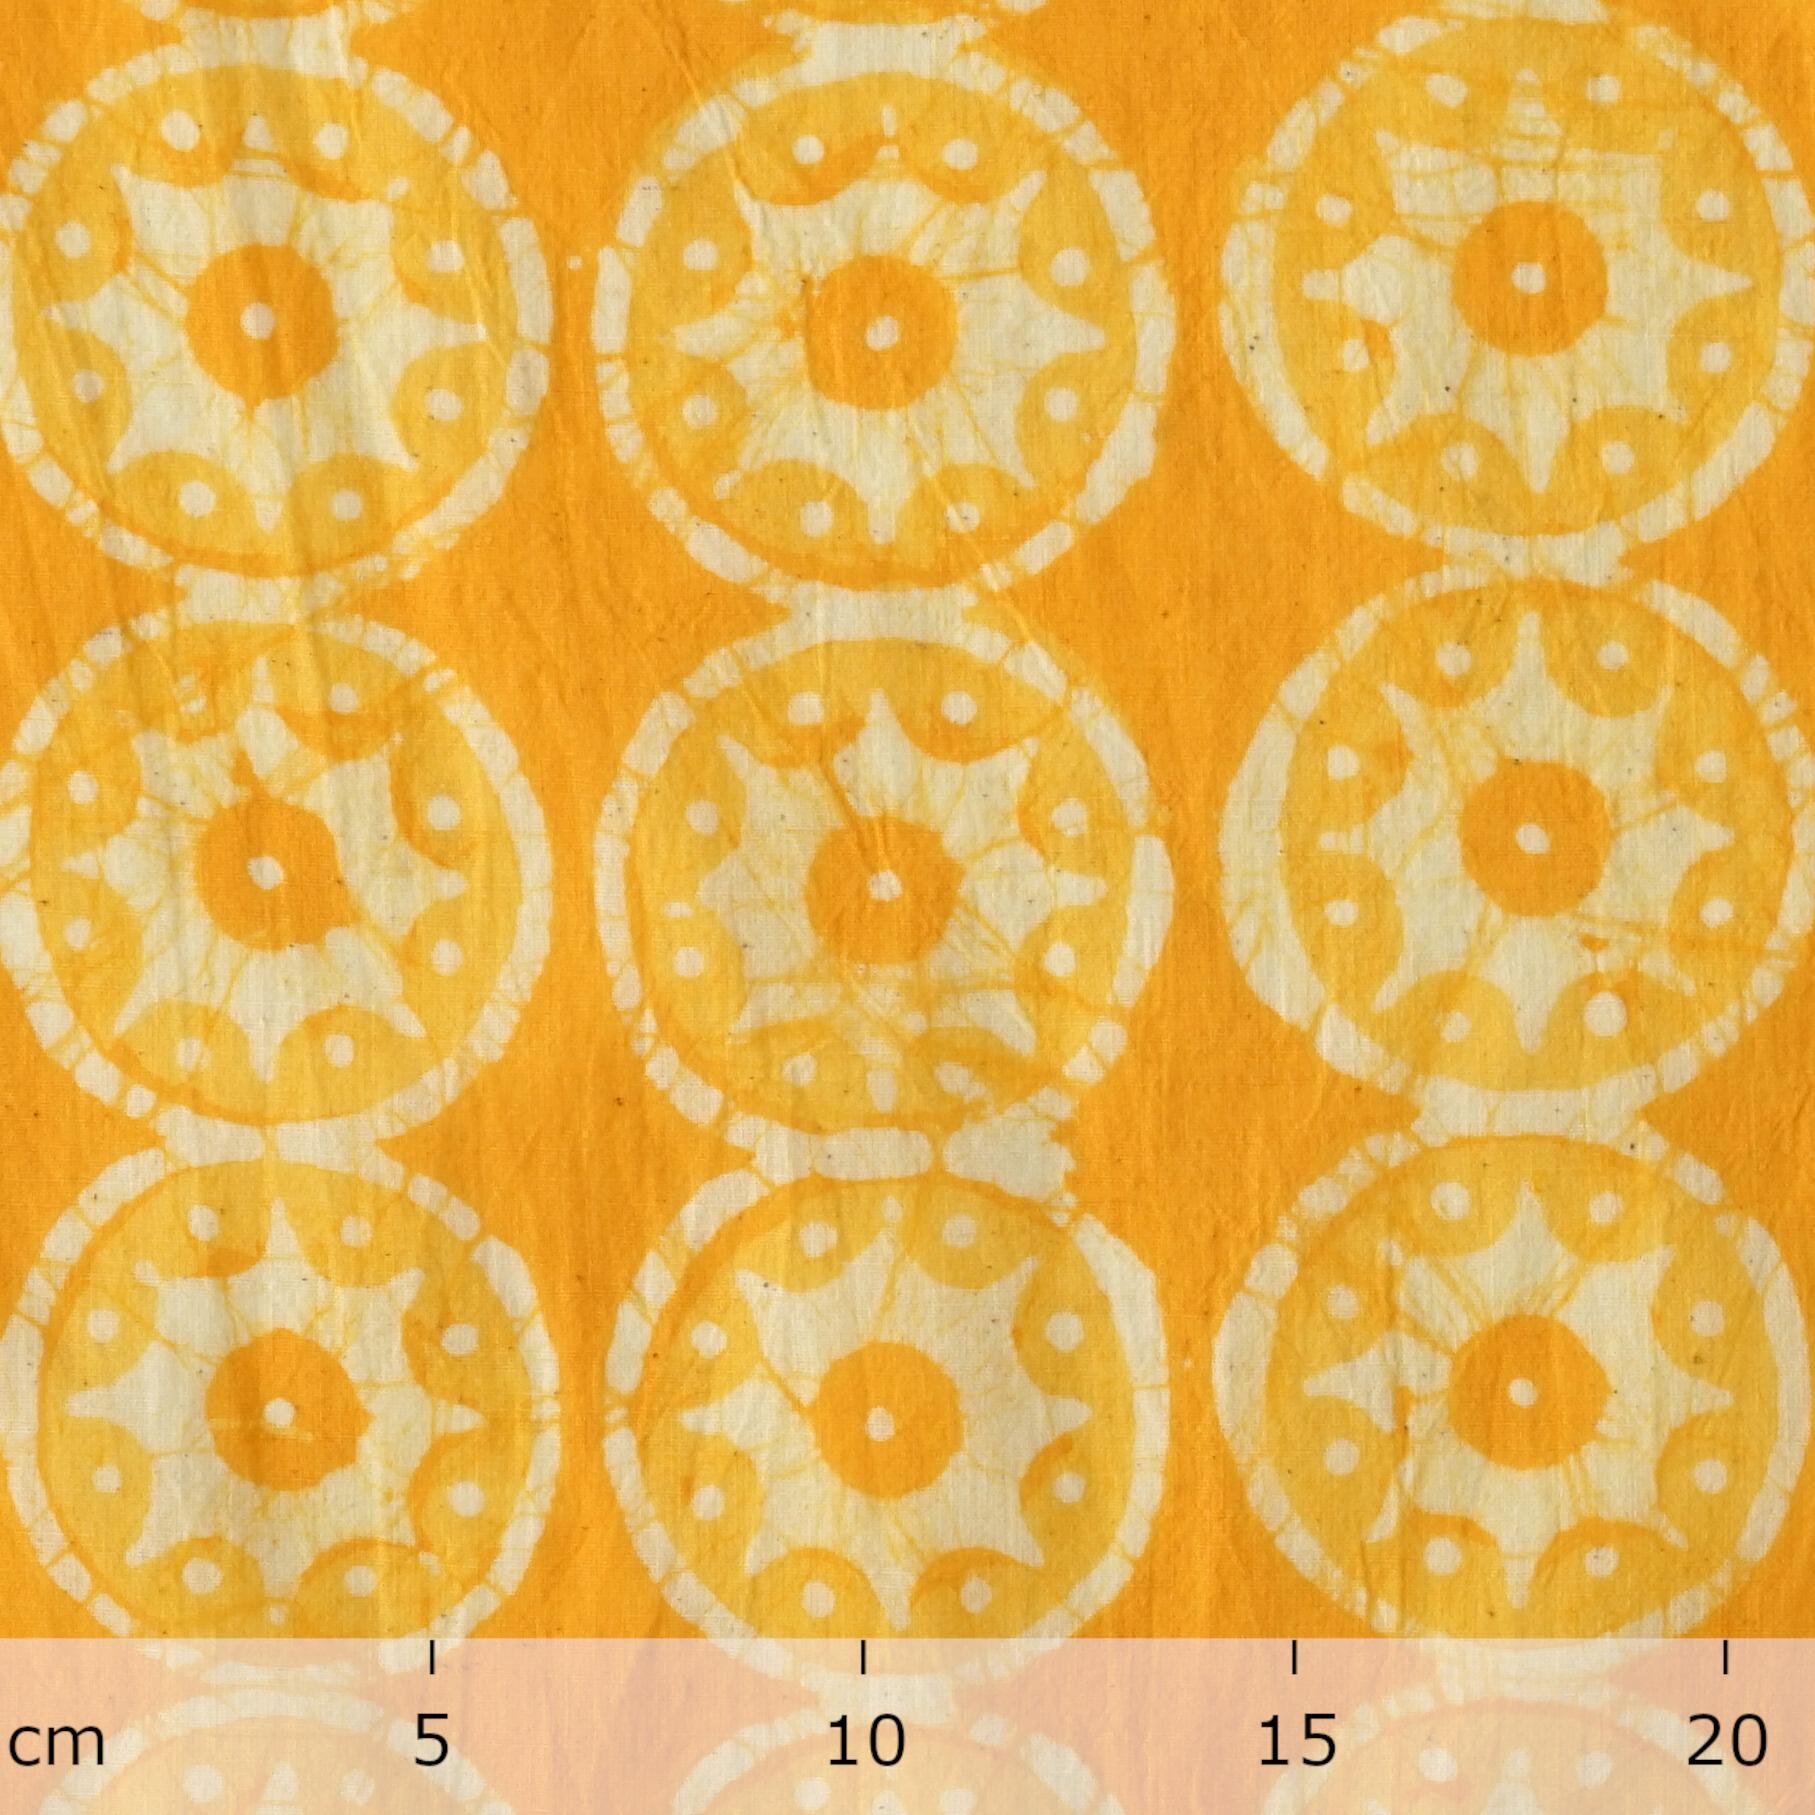 100% Block-Printed Batik Cotton Fabric From India - Sunkissed Design - Yellow Dye - Ruler